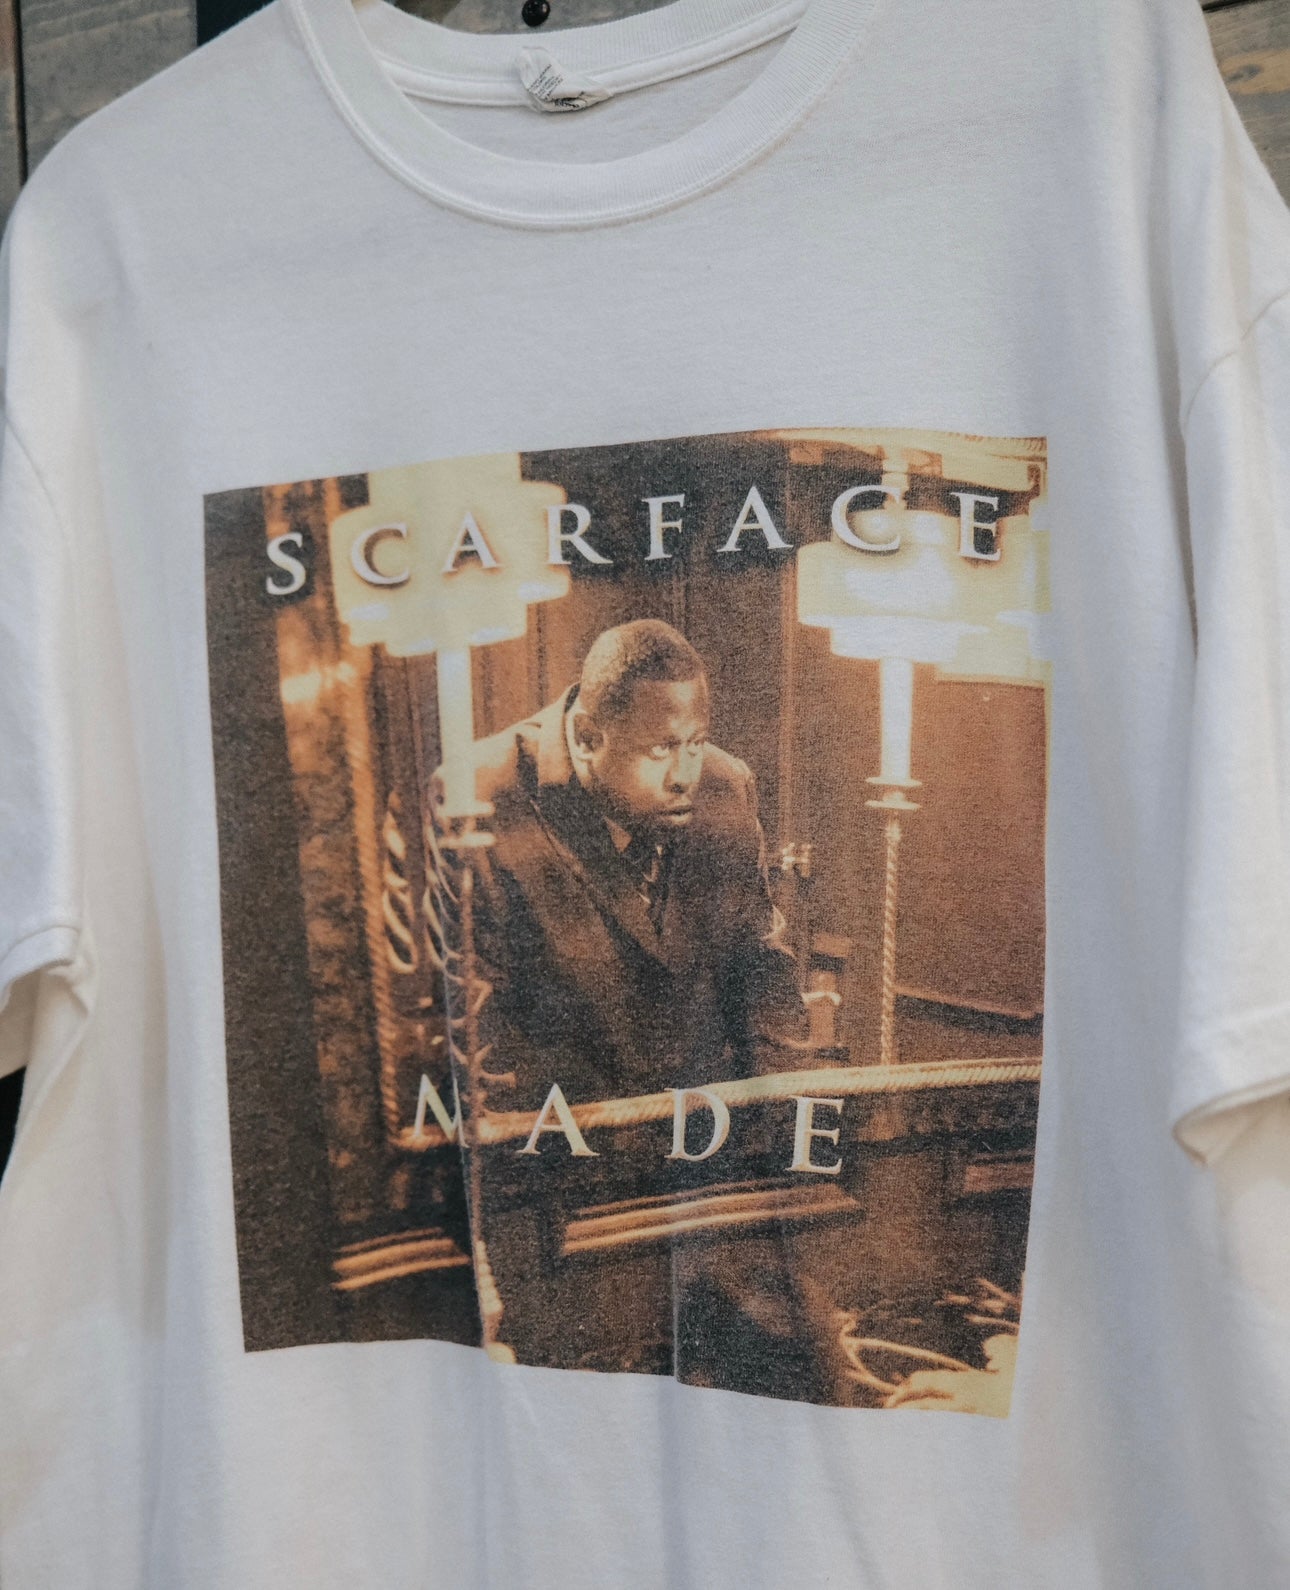 Scarface “Made” Promo Rap Tee